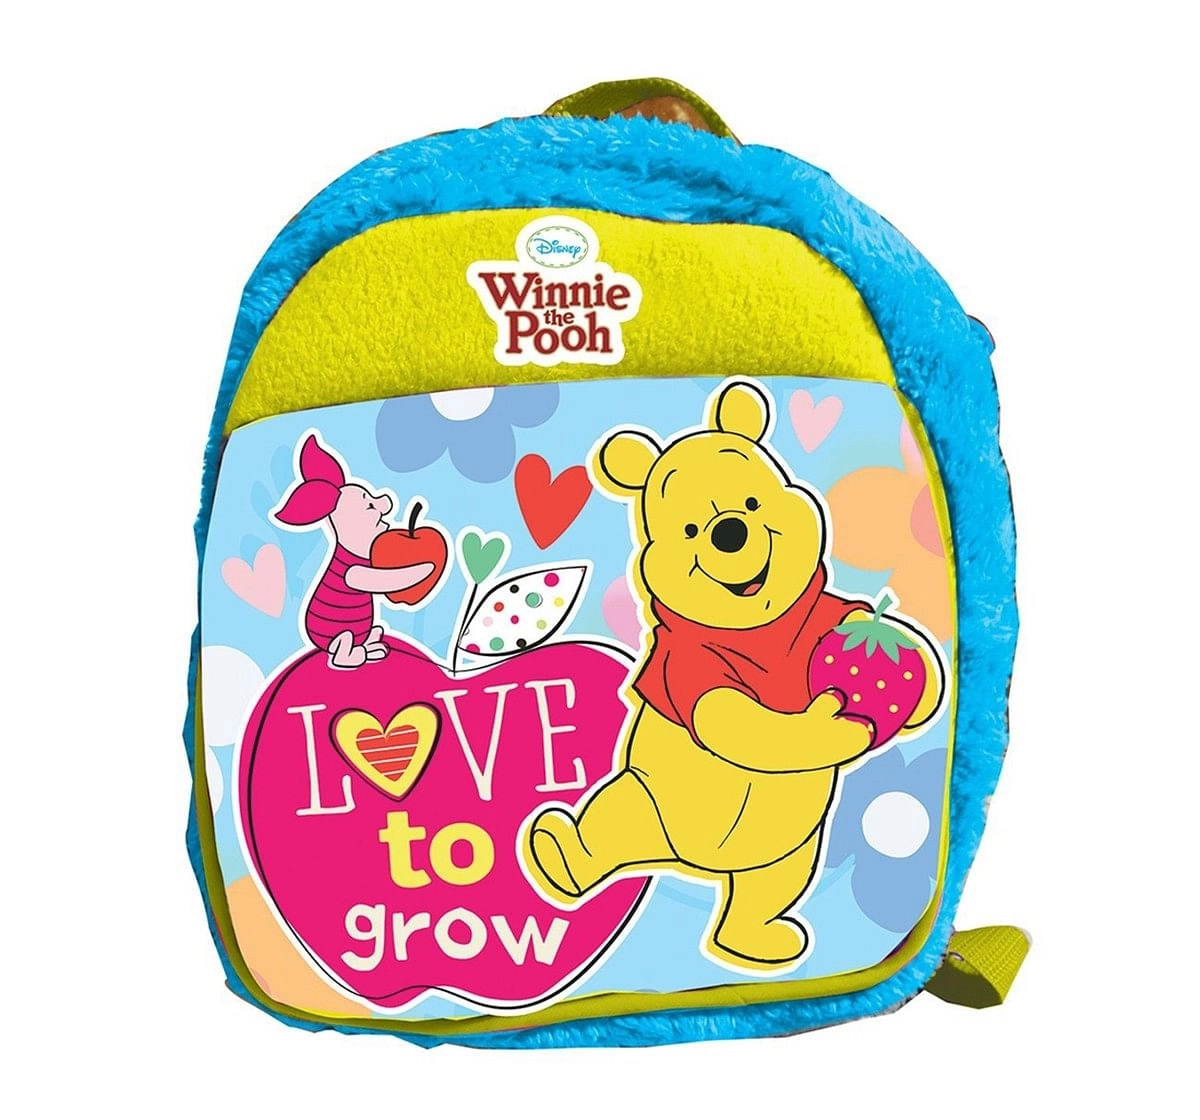 Winnie The Pooh & Pals Disney And Friends Plush Bag, Multi Color, 12 Inch Plush Accessories for Kids age 0M+ - 10 Cm 